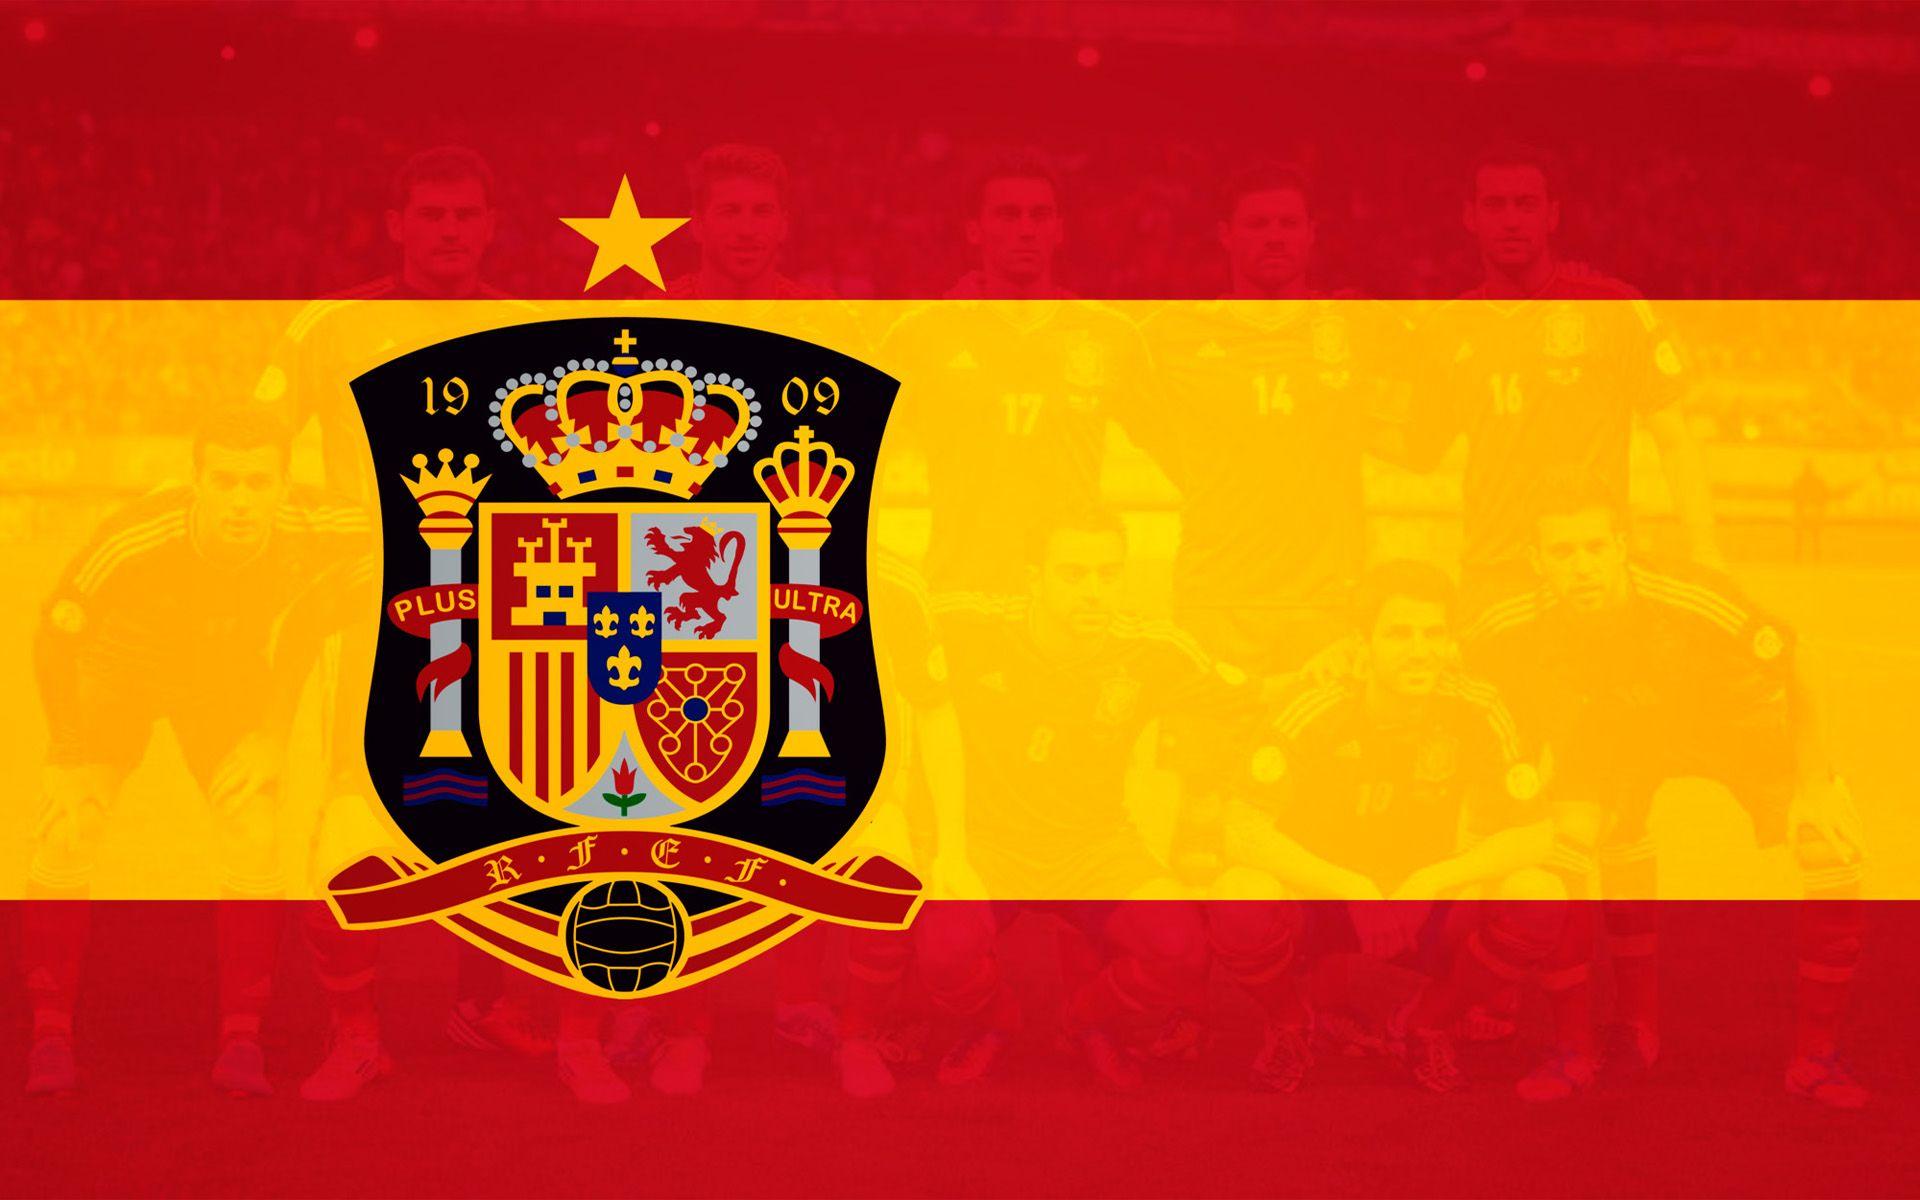 Spain National Football Team Wallpaper Find best latest Spain